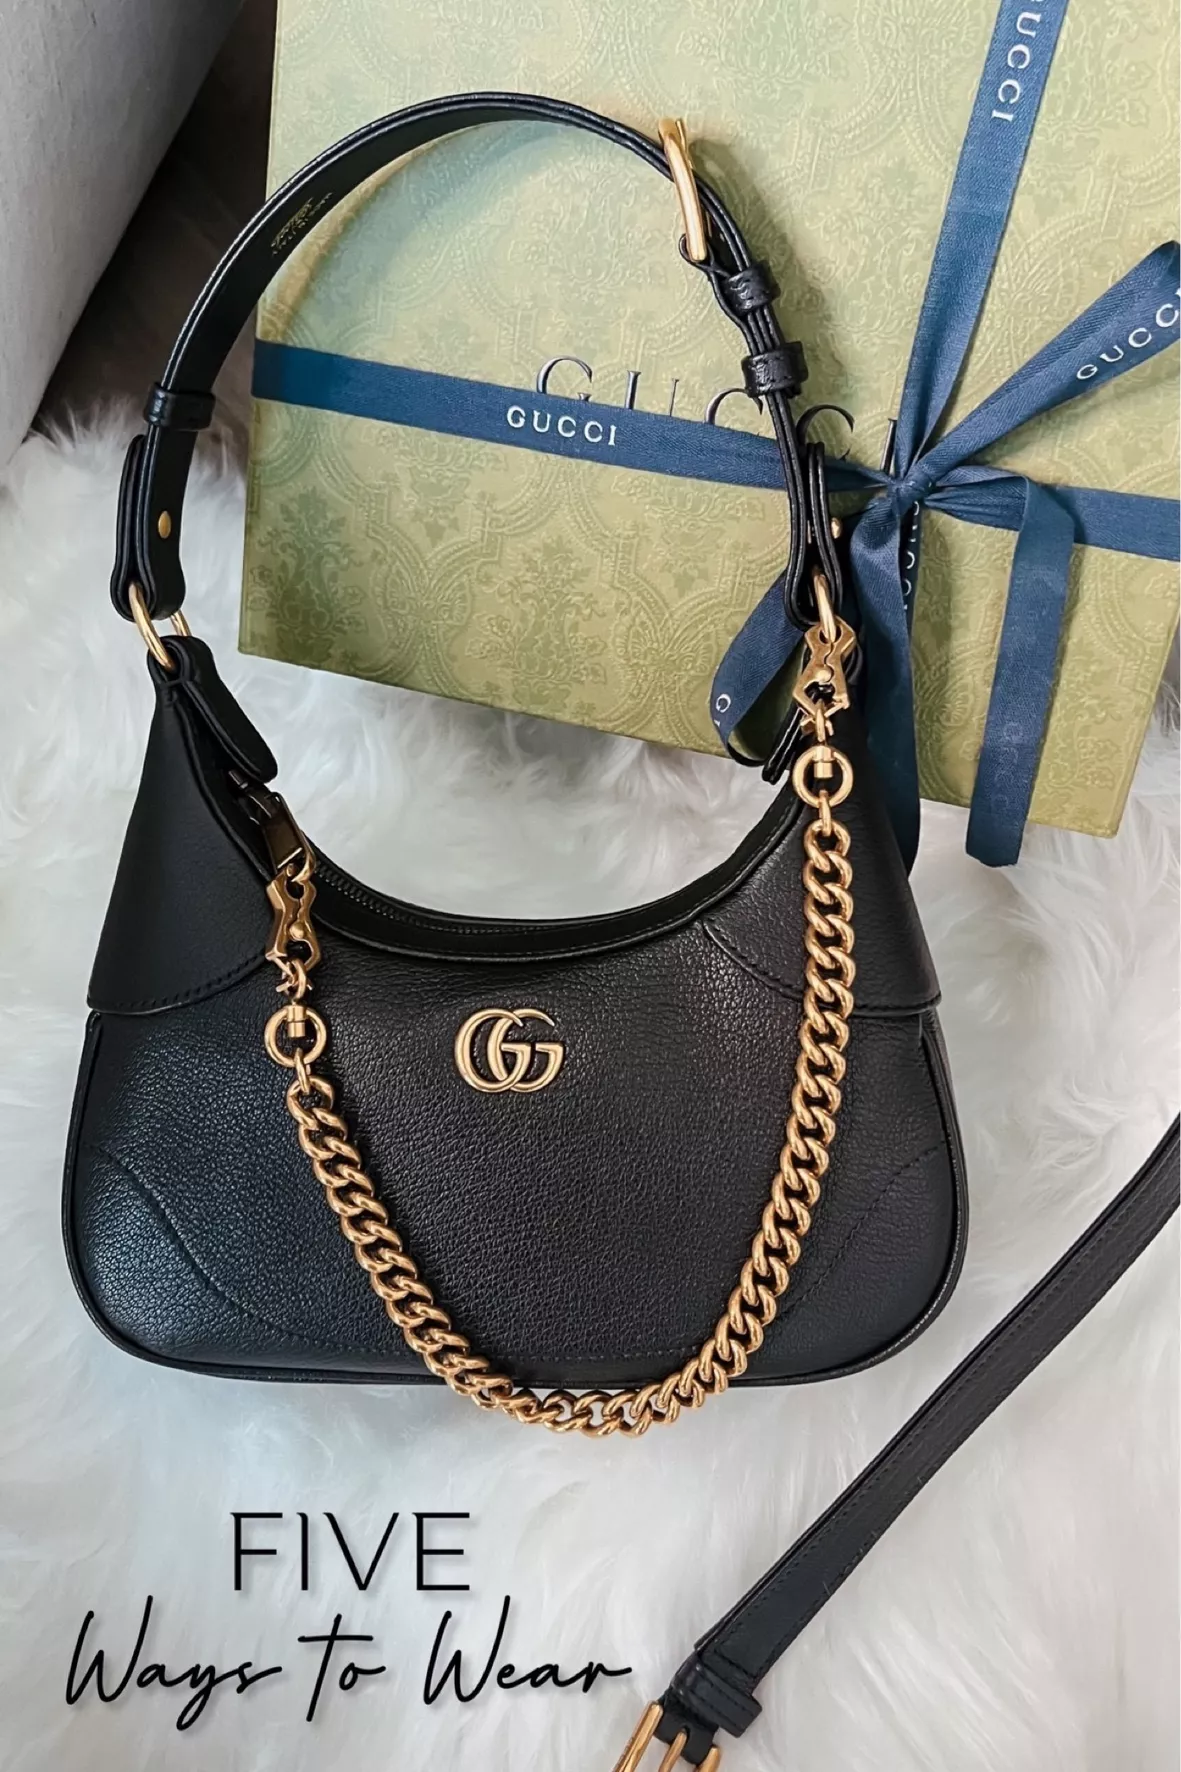 Aphrodite Small Leather Shoulder Bag in Black - Gucci